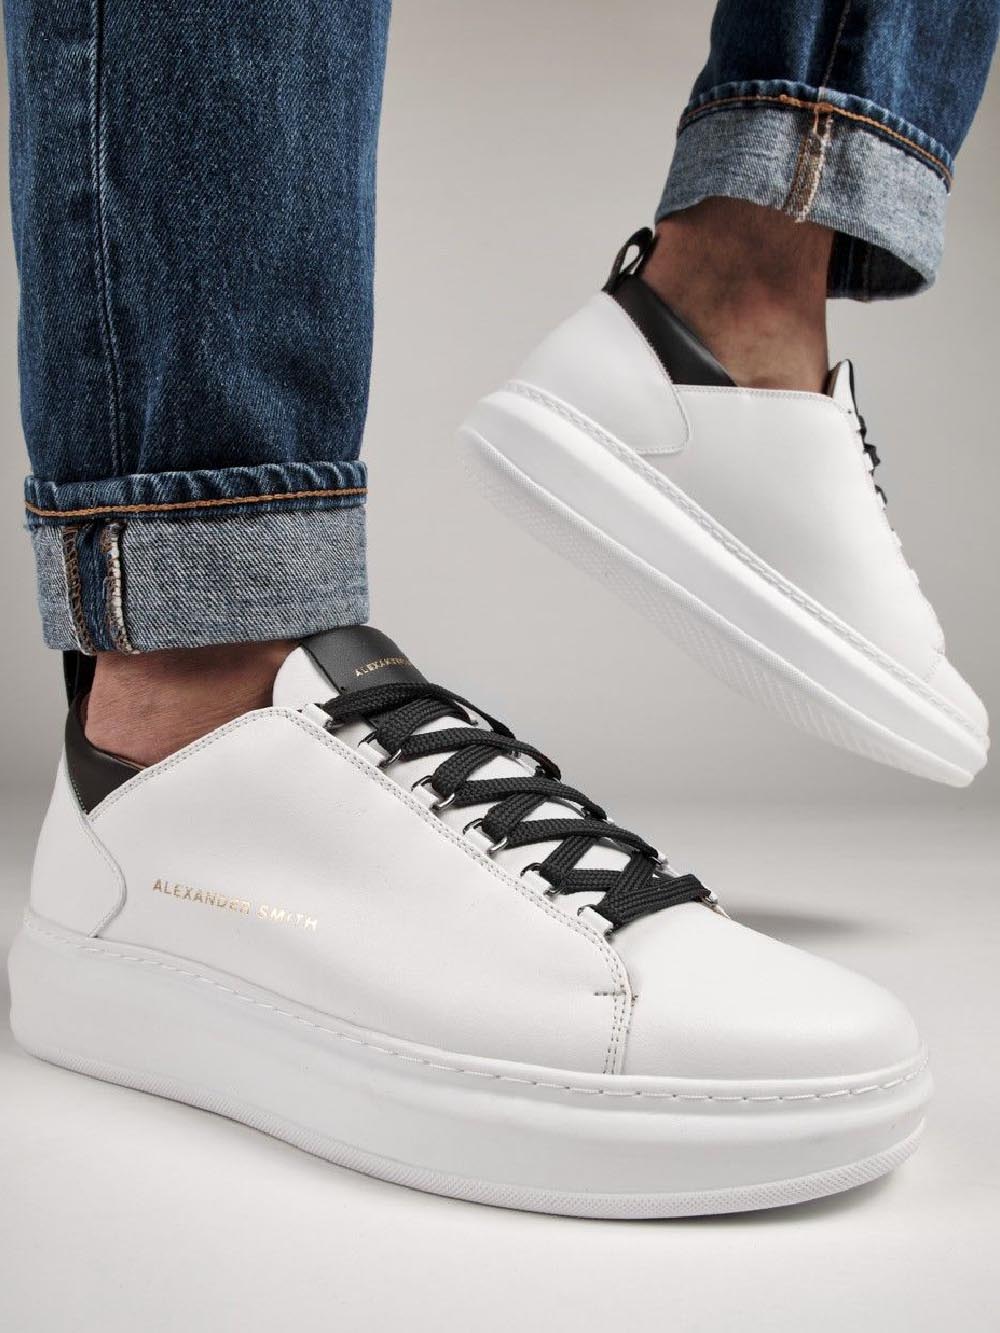 Alexander Smith Sneakers Uomo Bianco/nero